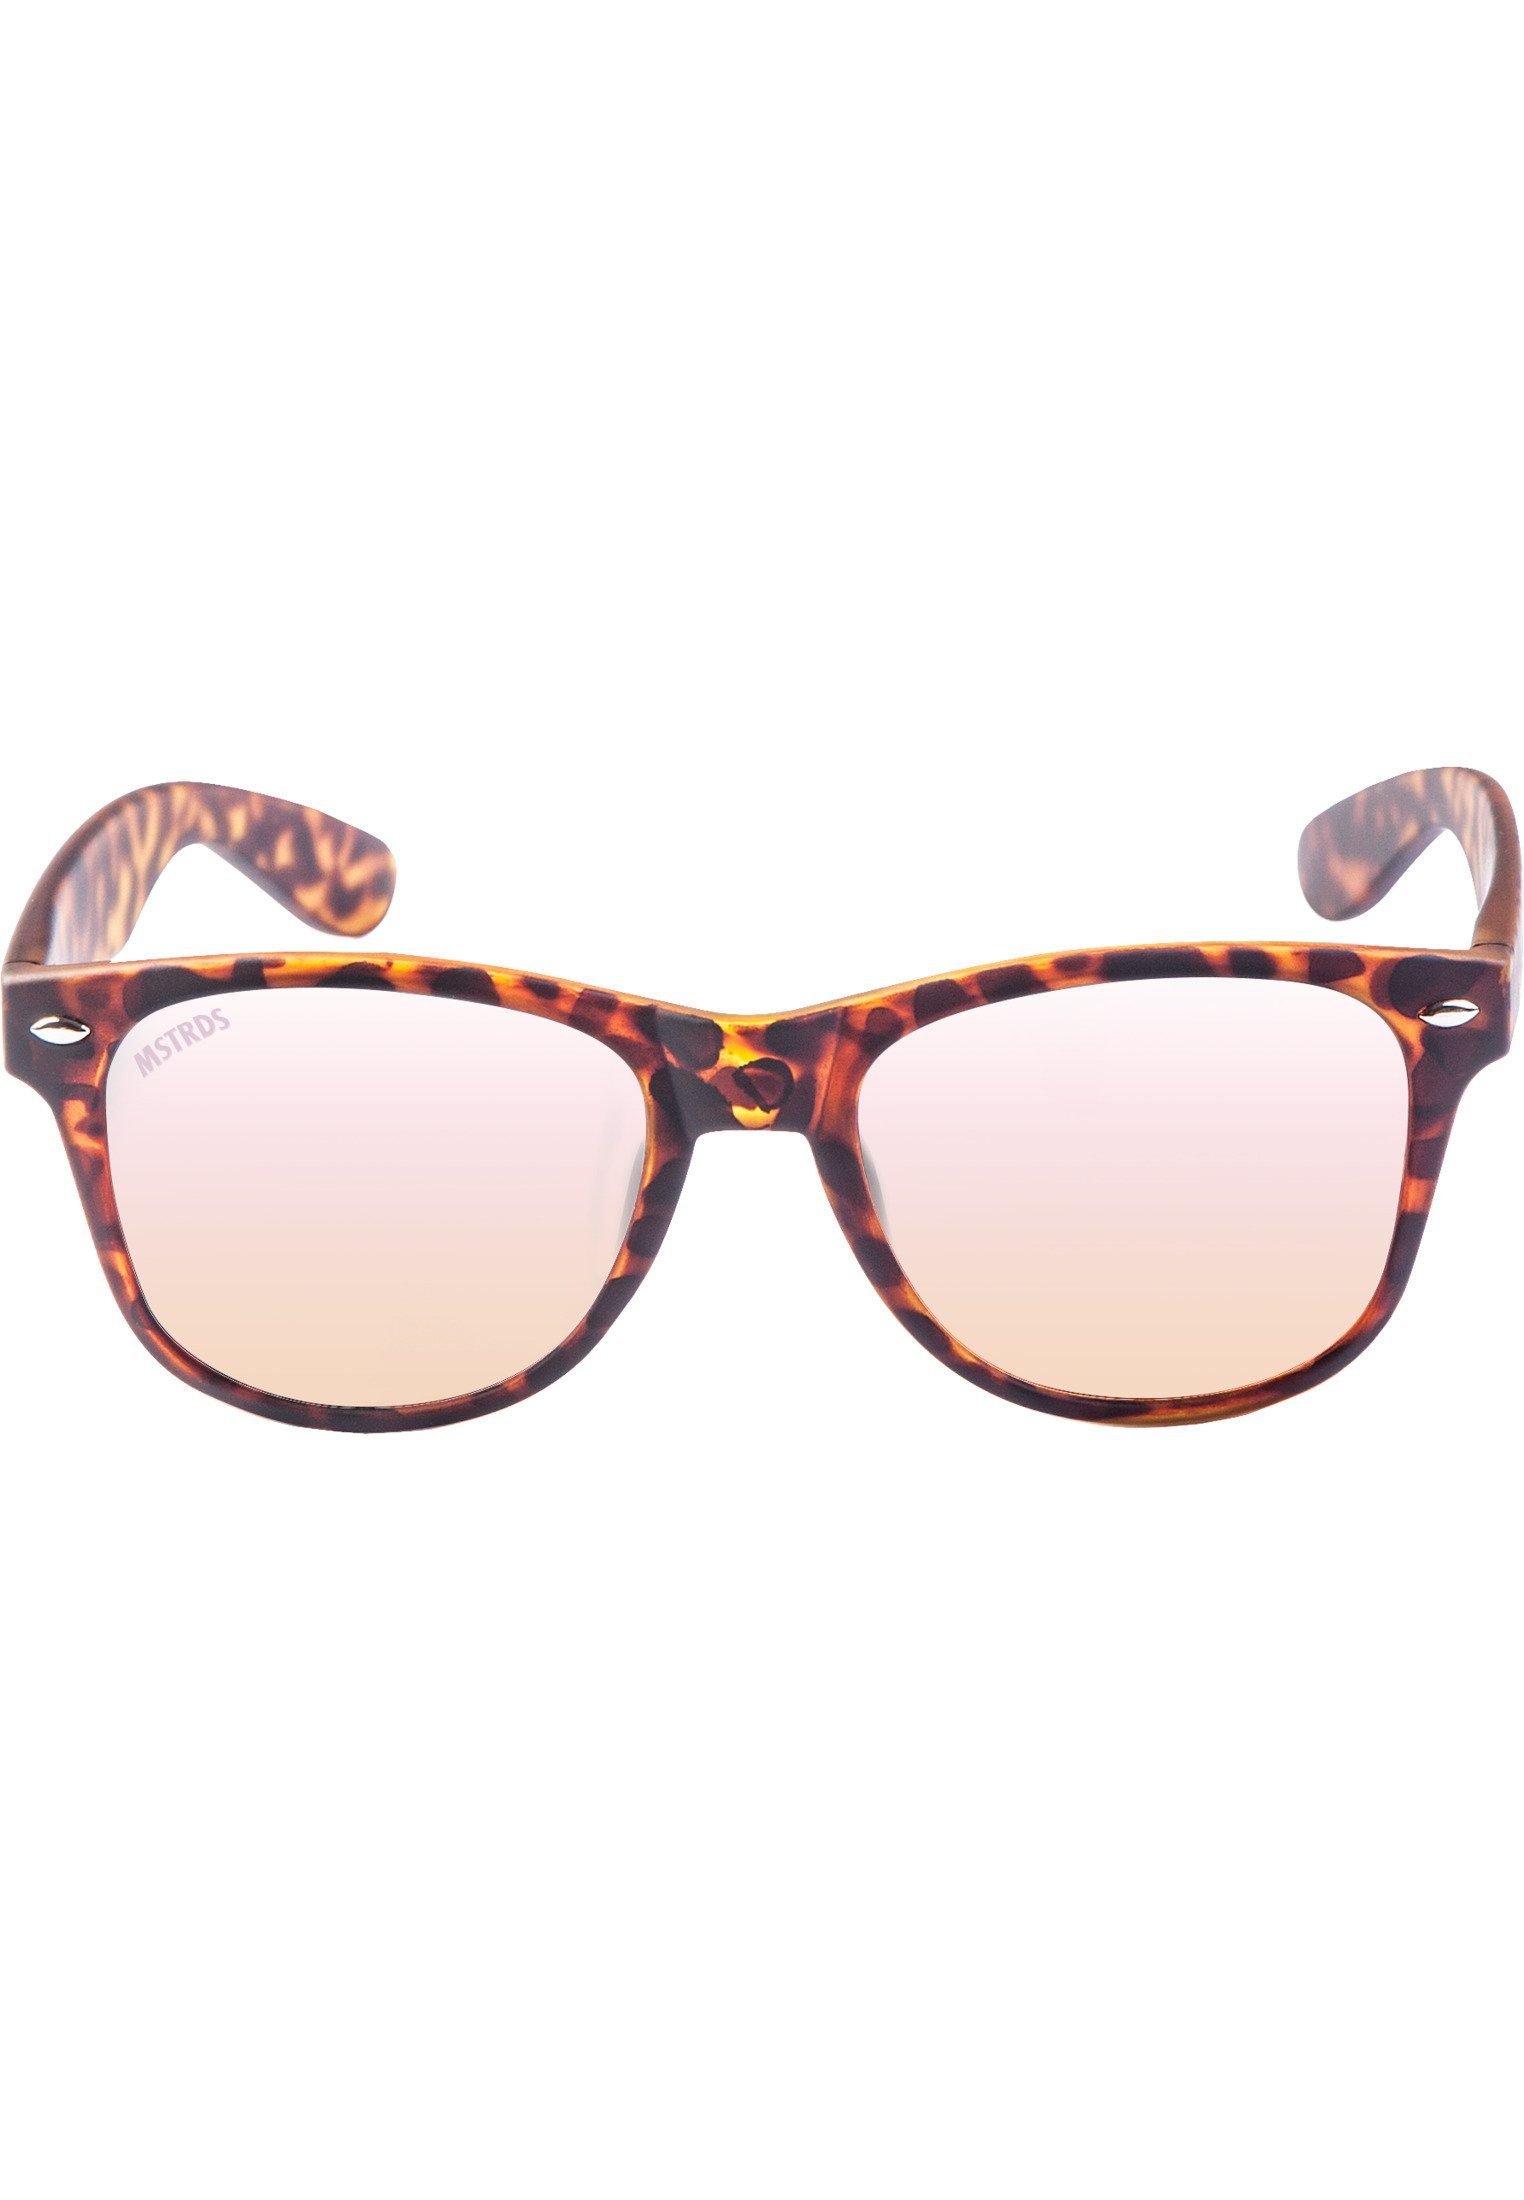 havanna/rosé Likoma Sunglasses Youth MSTRDS Sonnenbrille Accessoires